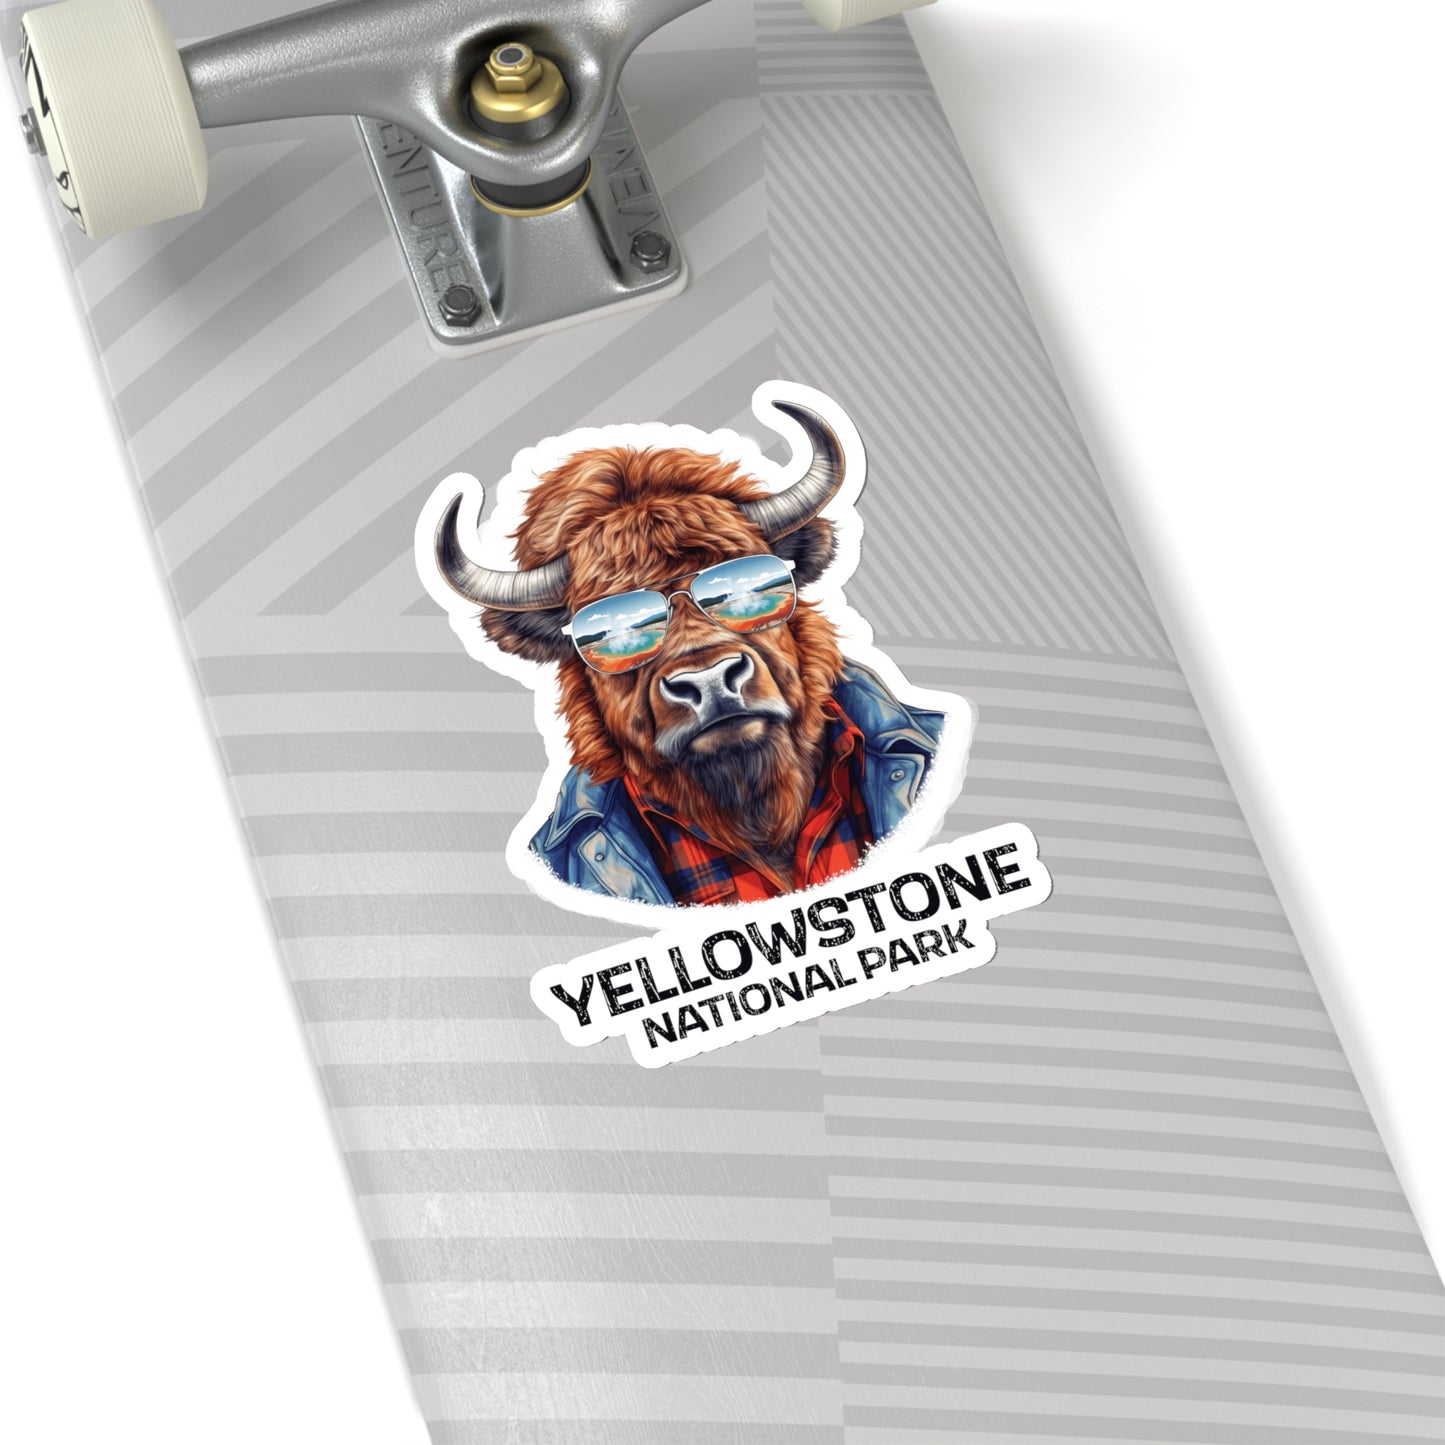 Yellowstone National Park Sticker - Moose